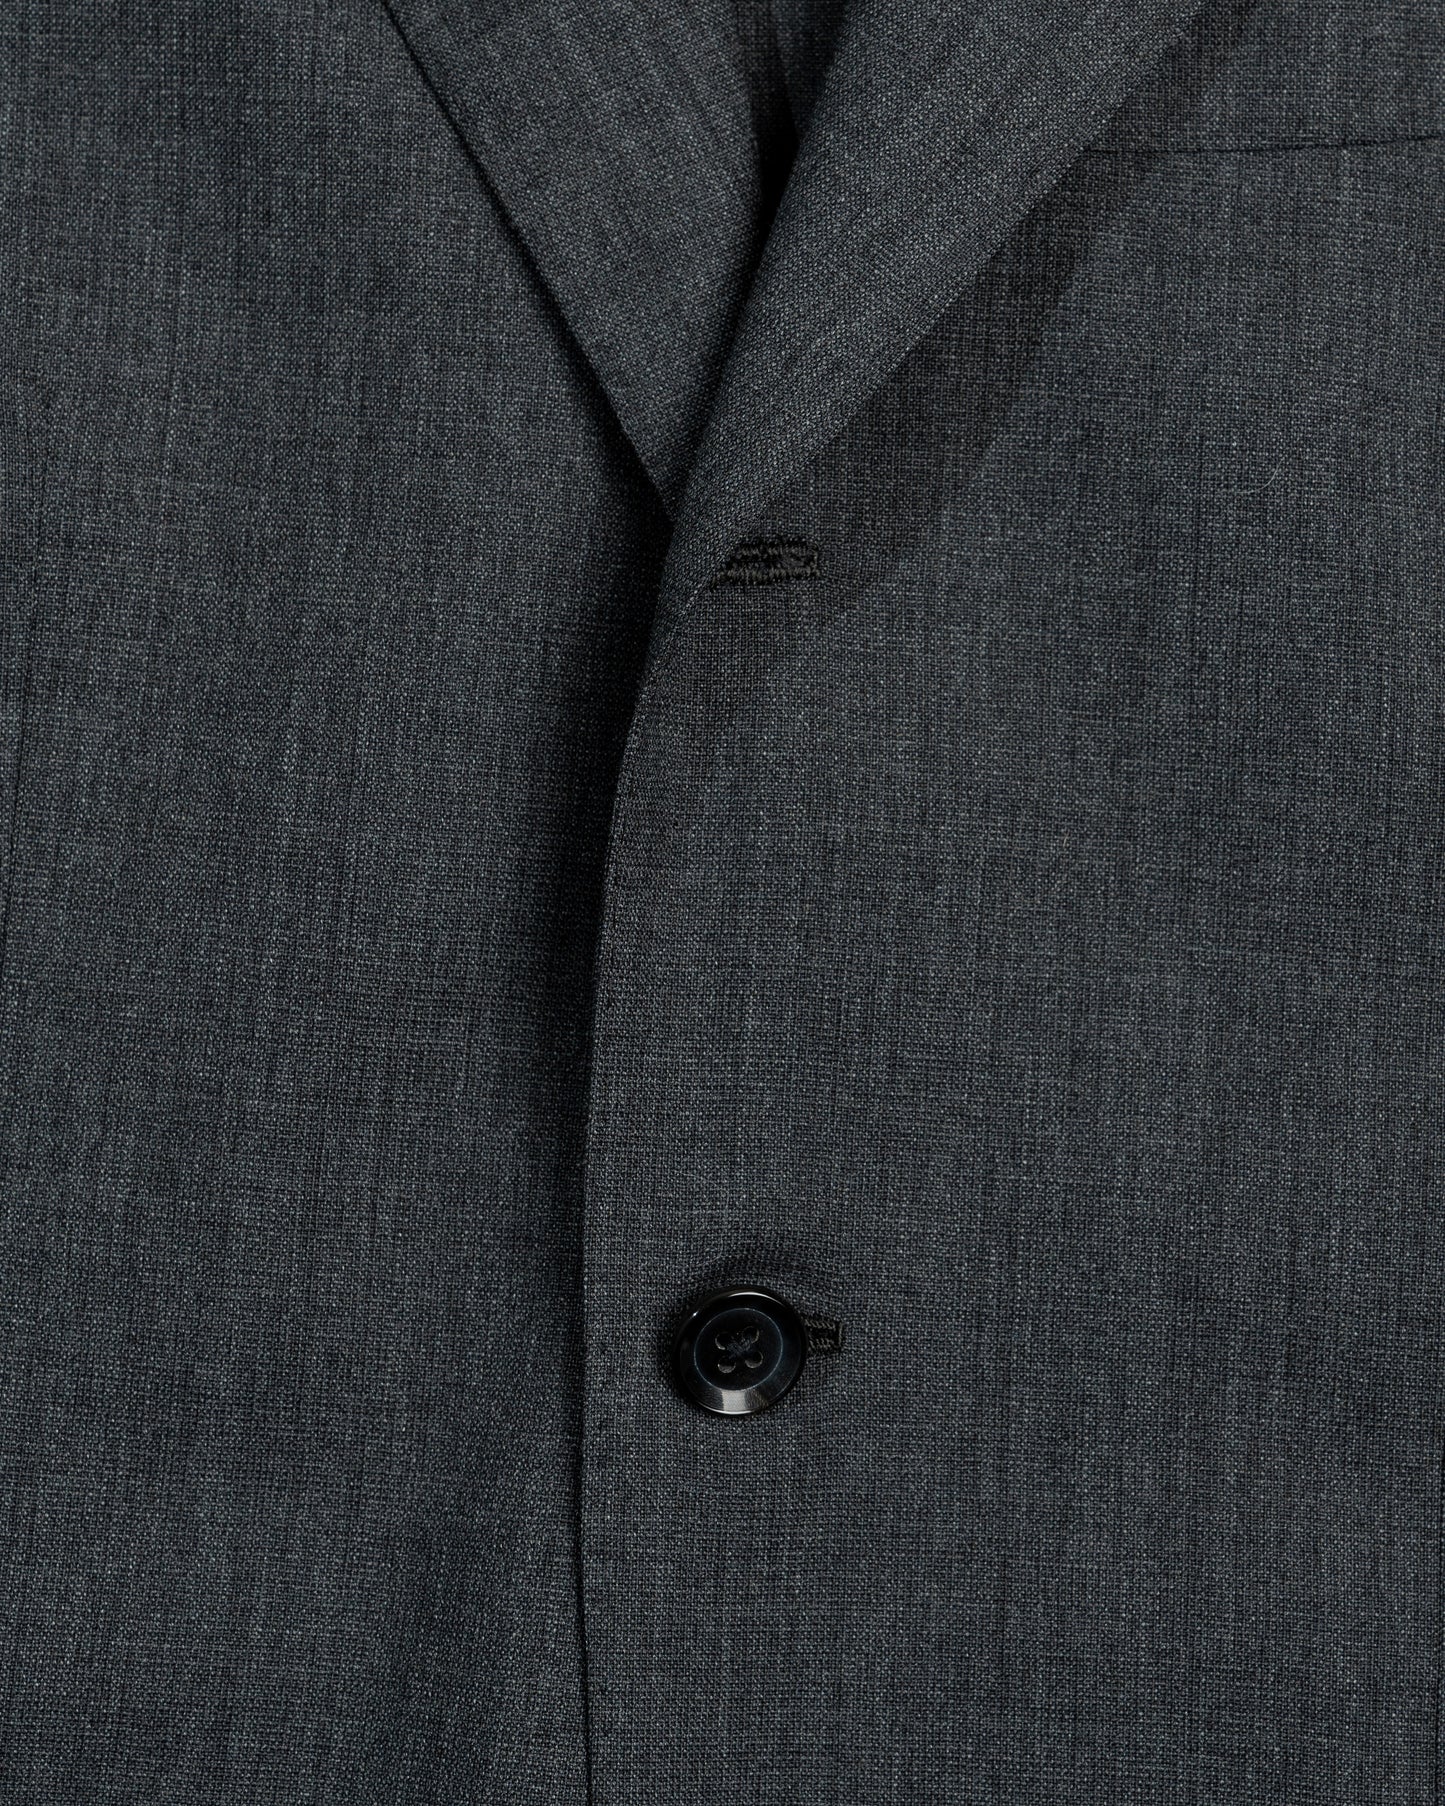 Ring Jacket Grey Suit